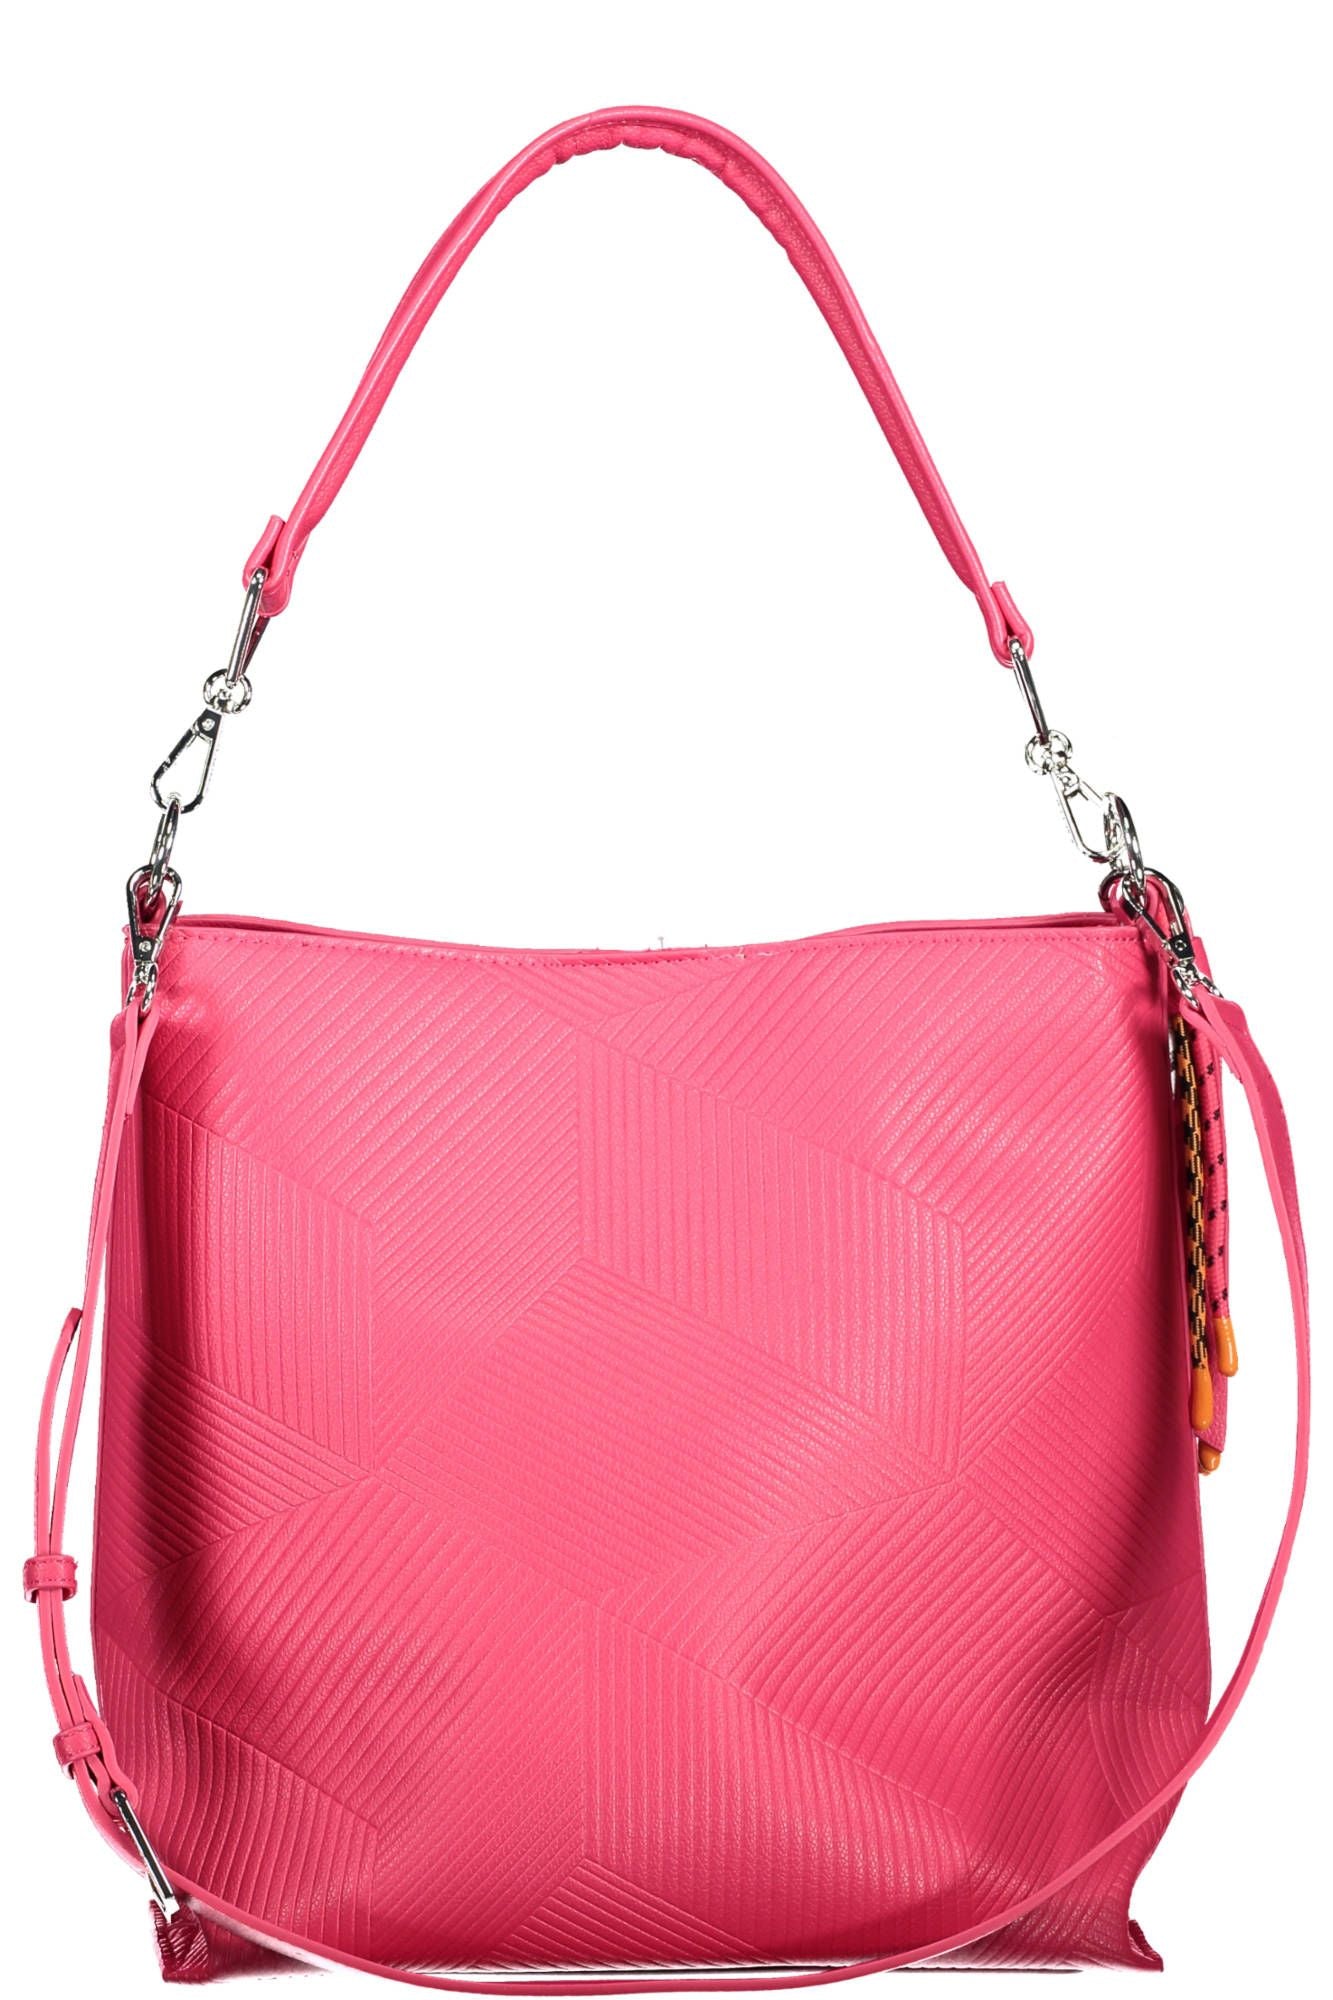 Vibrant Pink Convertible Handbag